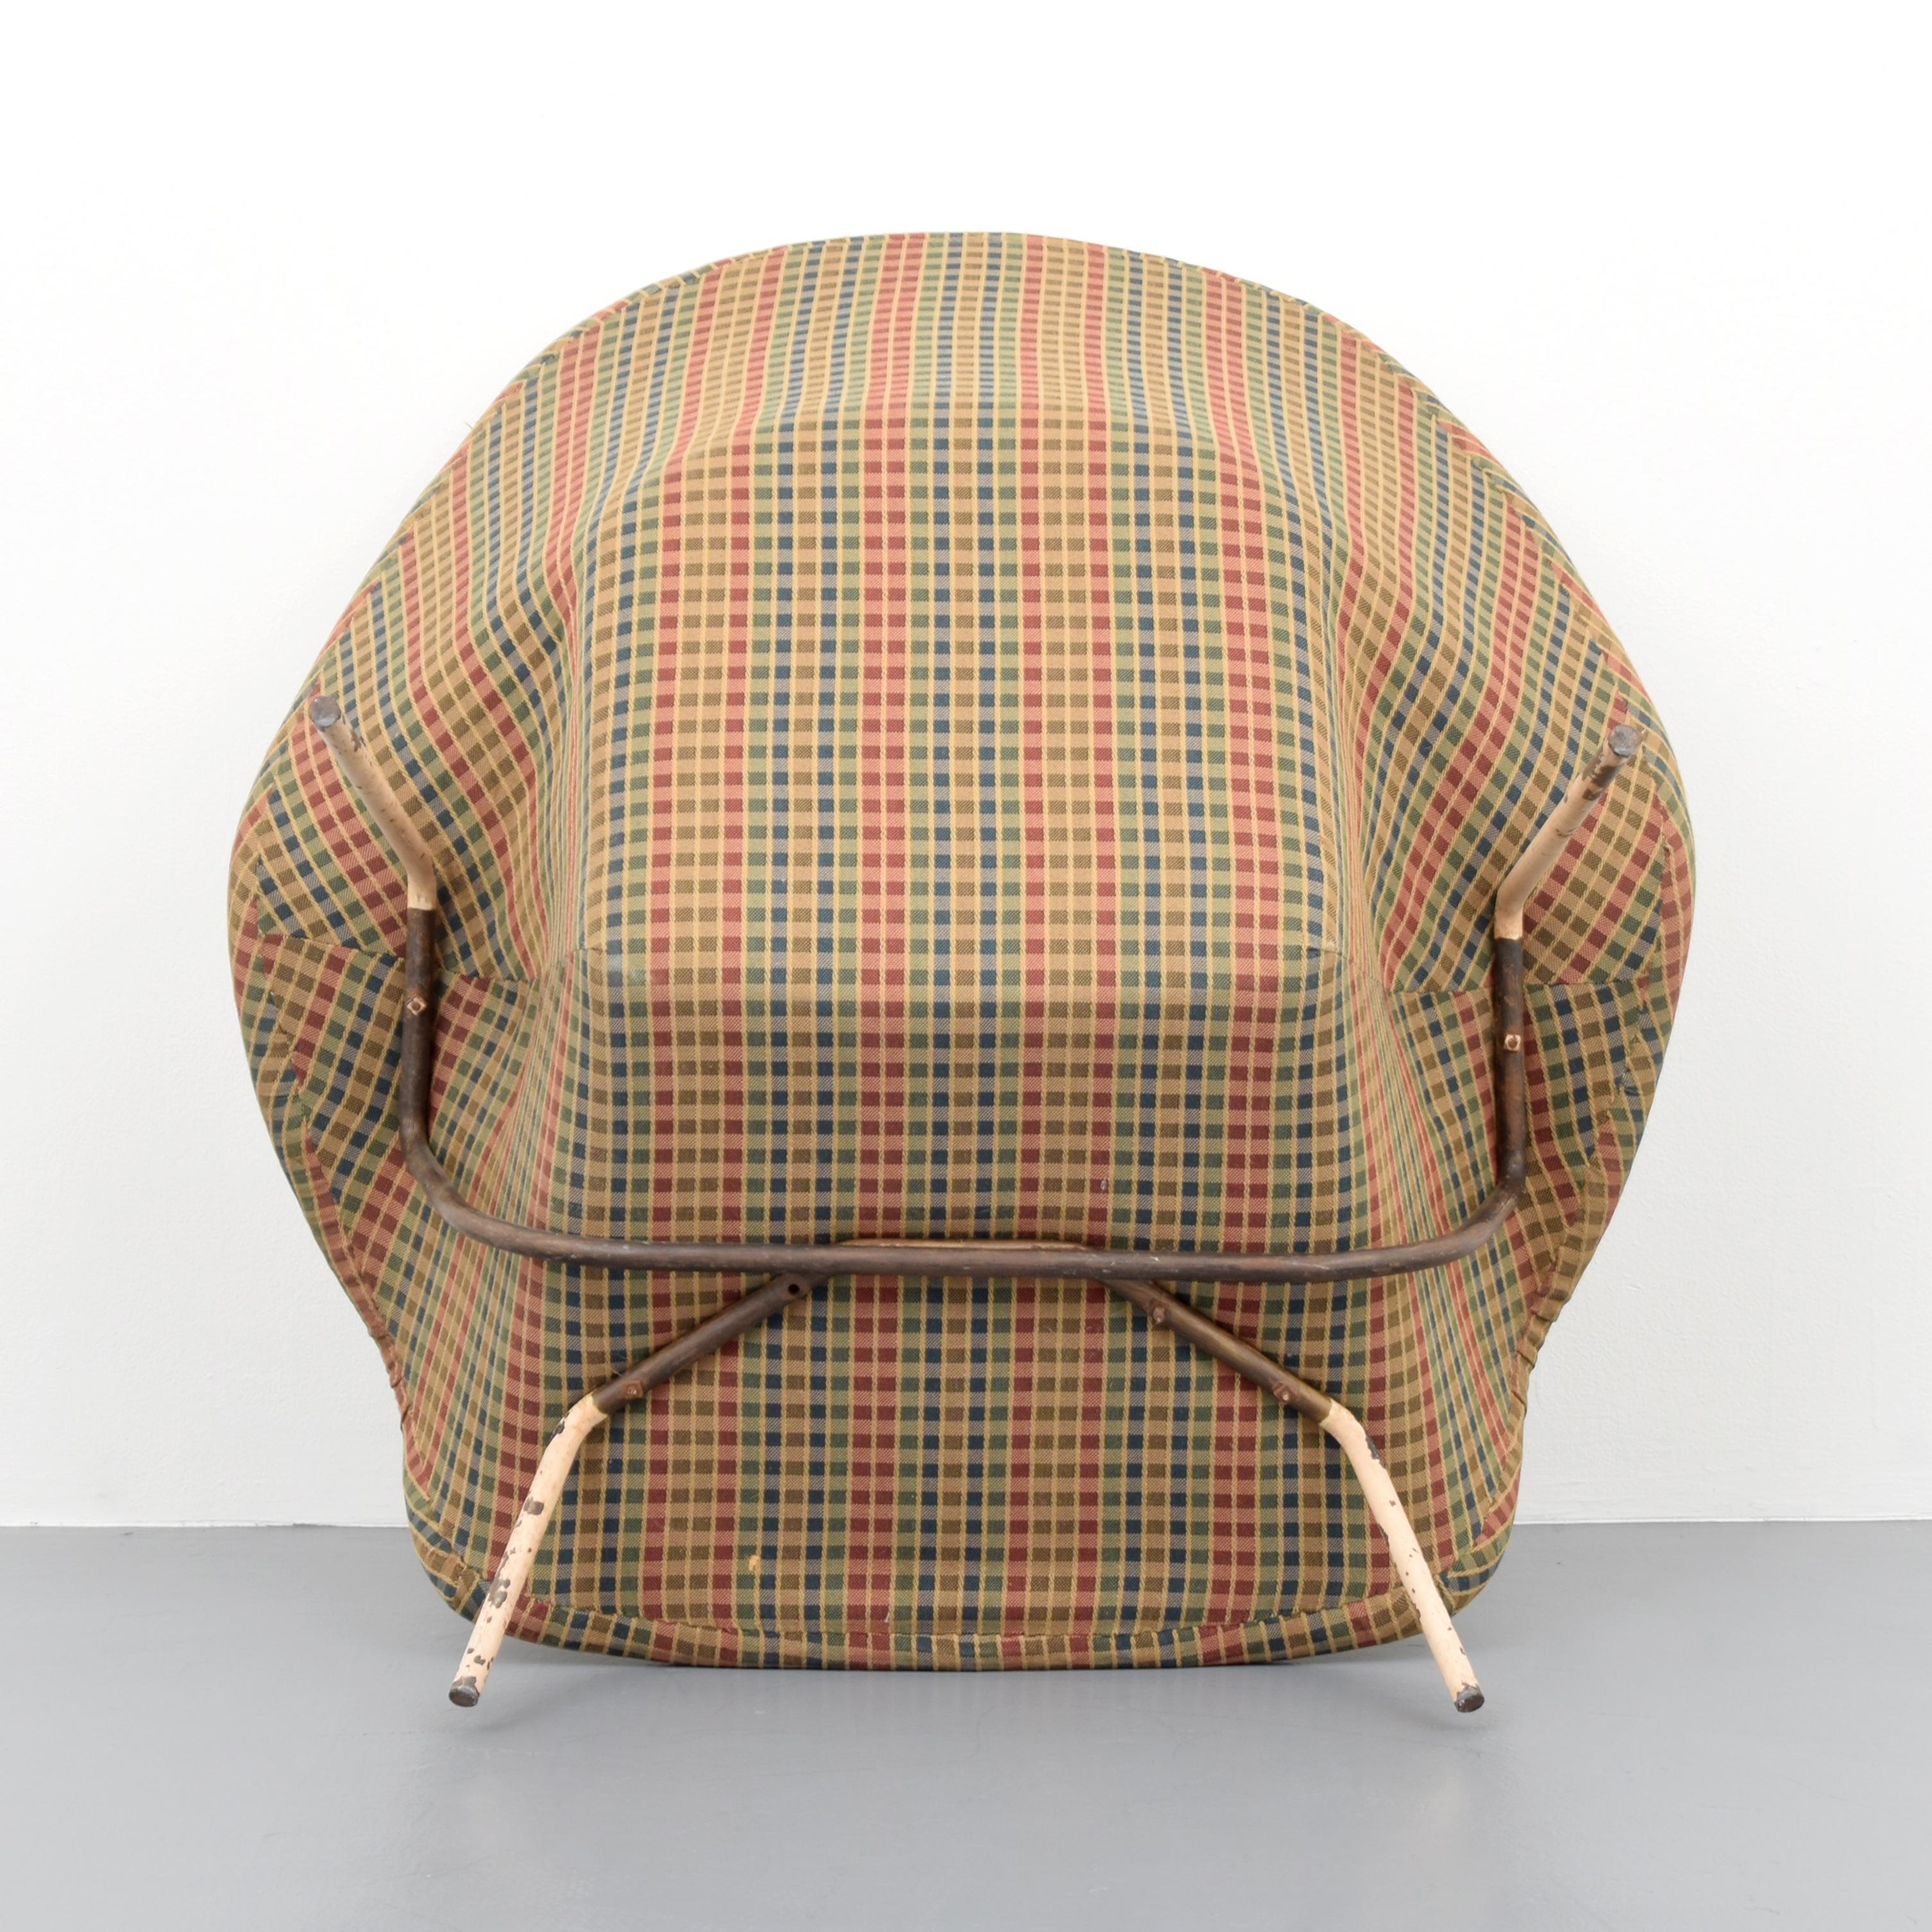 20th Century Early Eero Saarinen “Womb” Chair For Sale